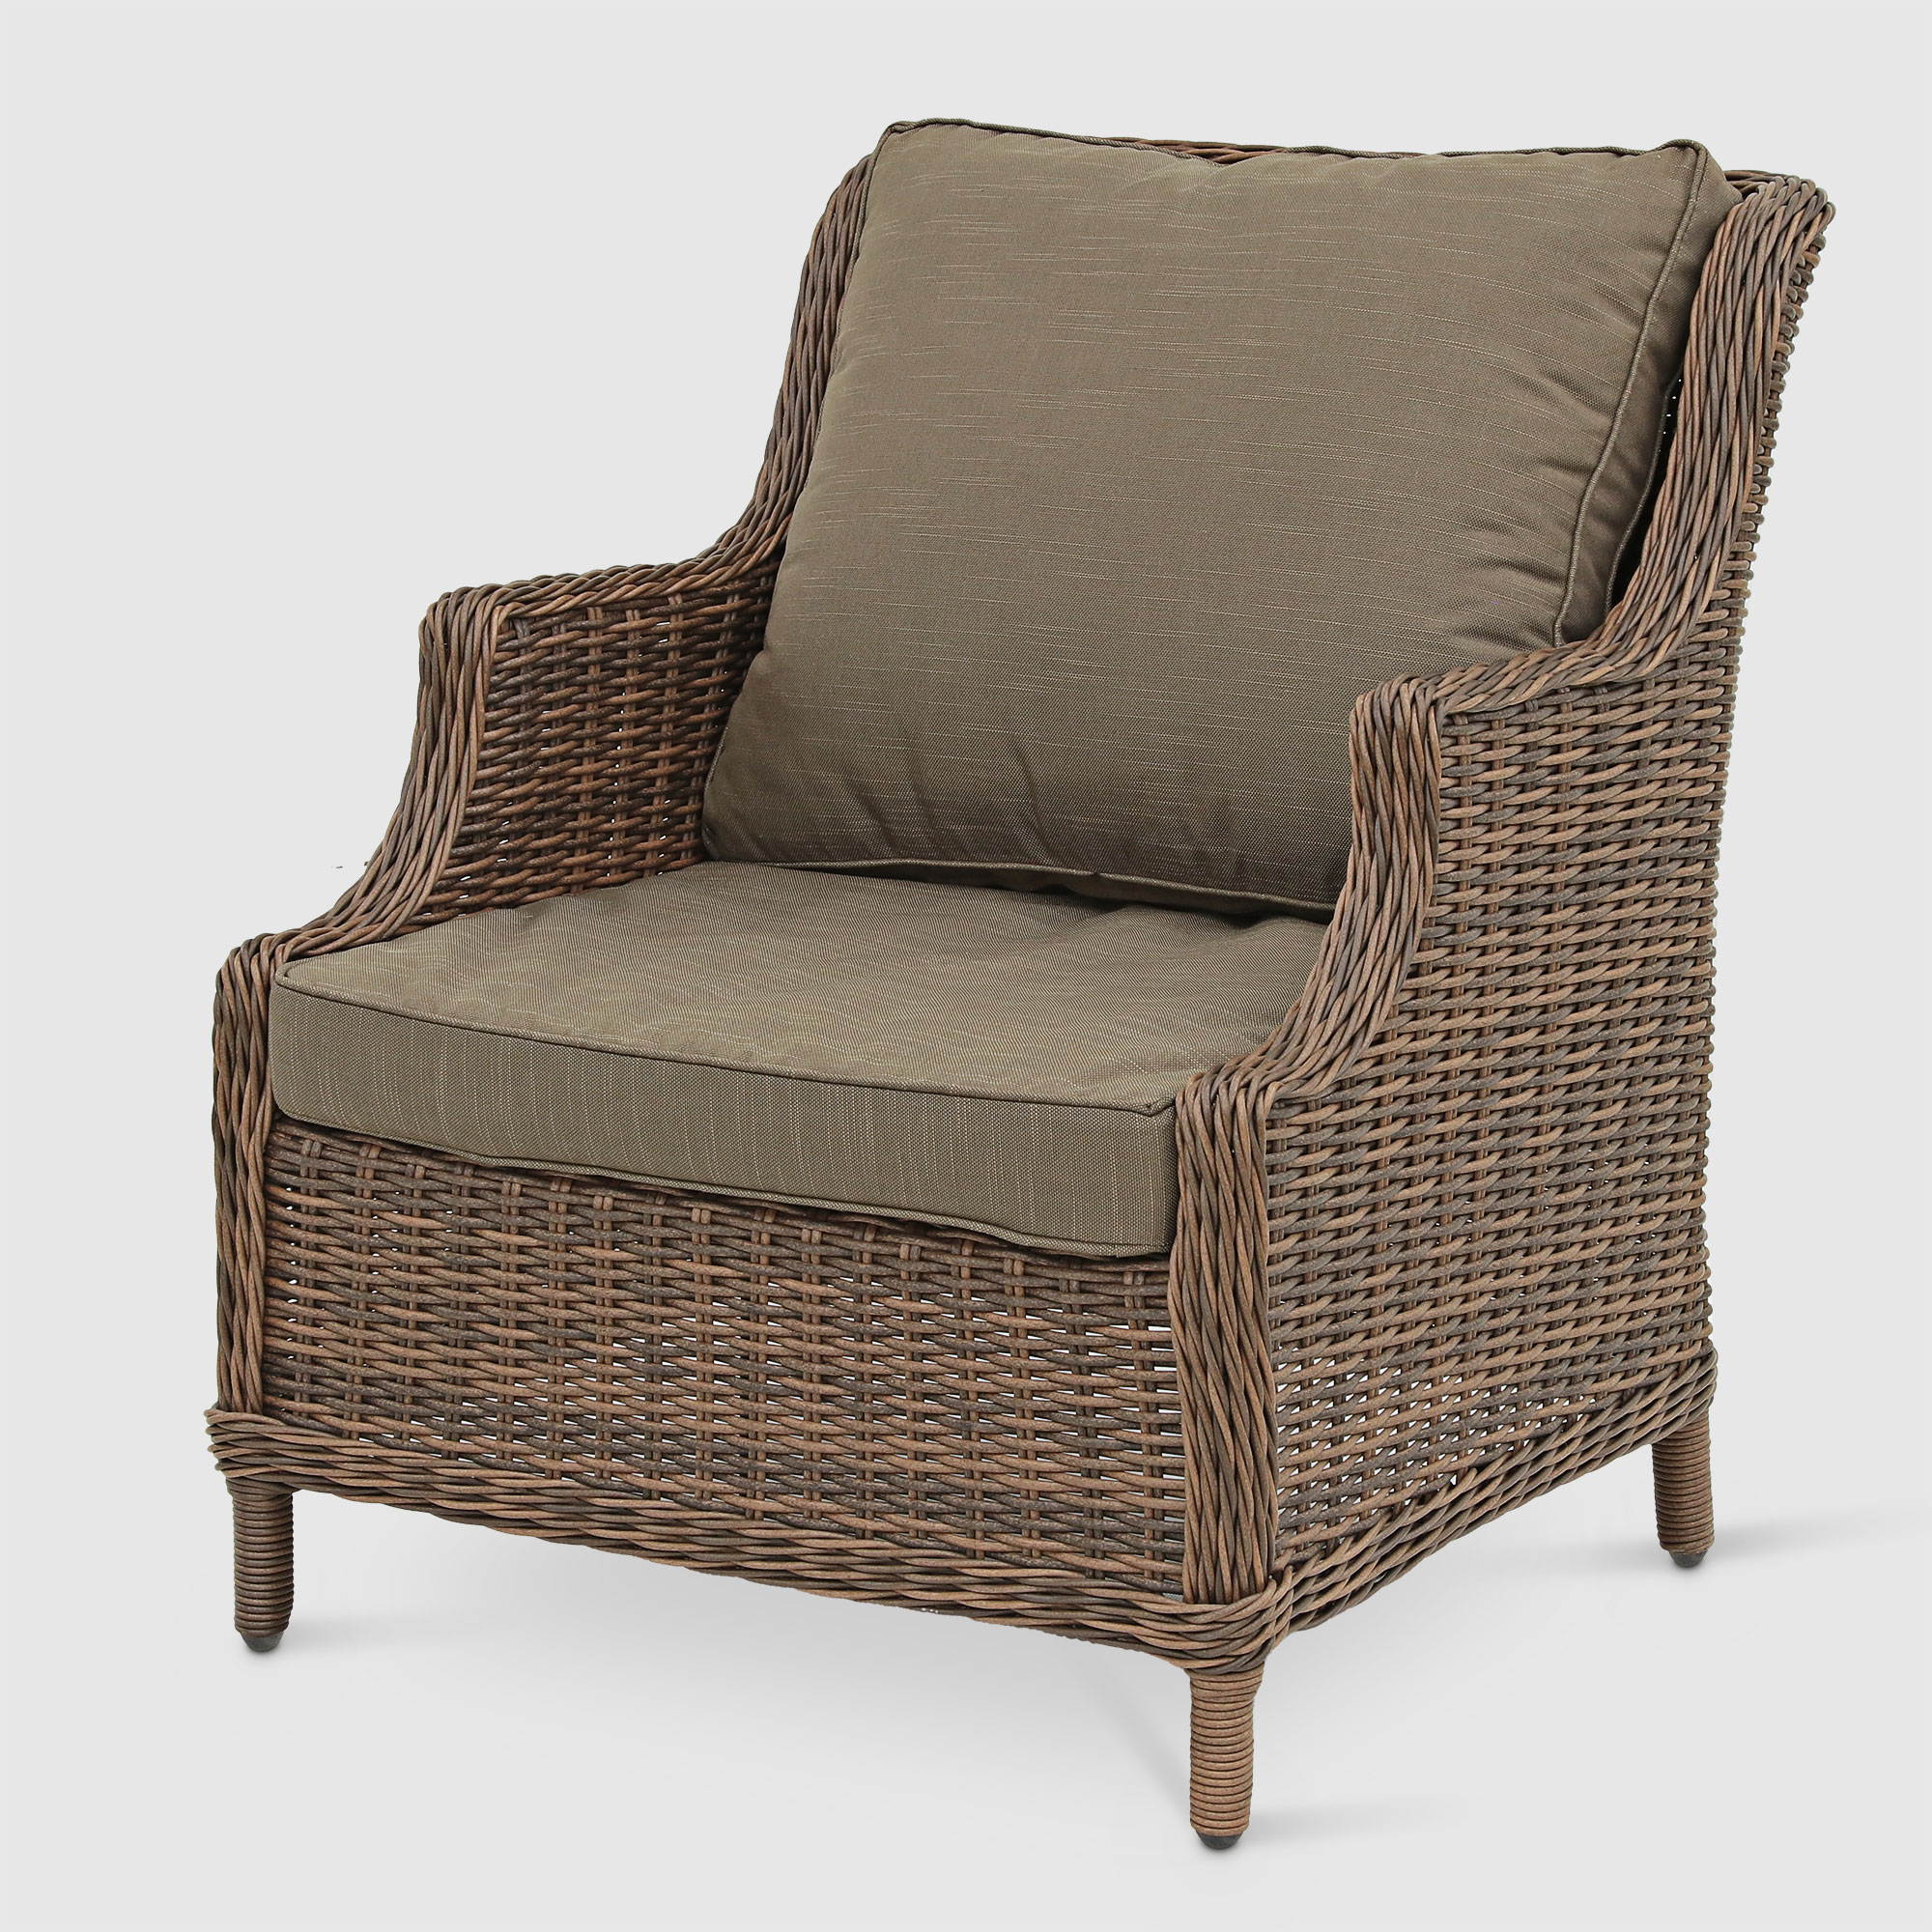 Комплект мебели Yuhang кресло + оттоманка + 2 софы + 2 стола, цвет серо-коричневый, размер 150х86х89; 208х80х87 - фото 3